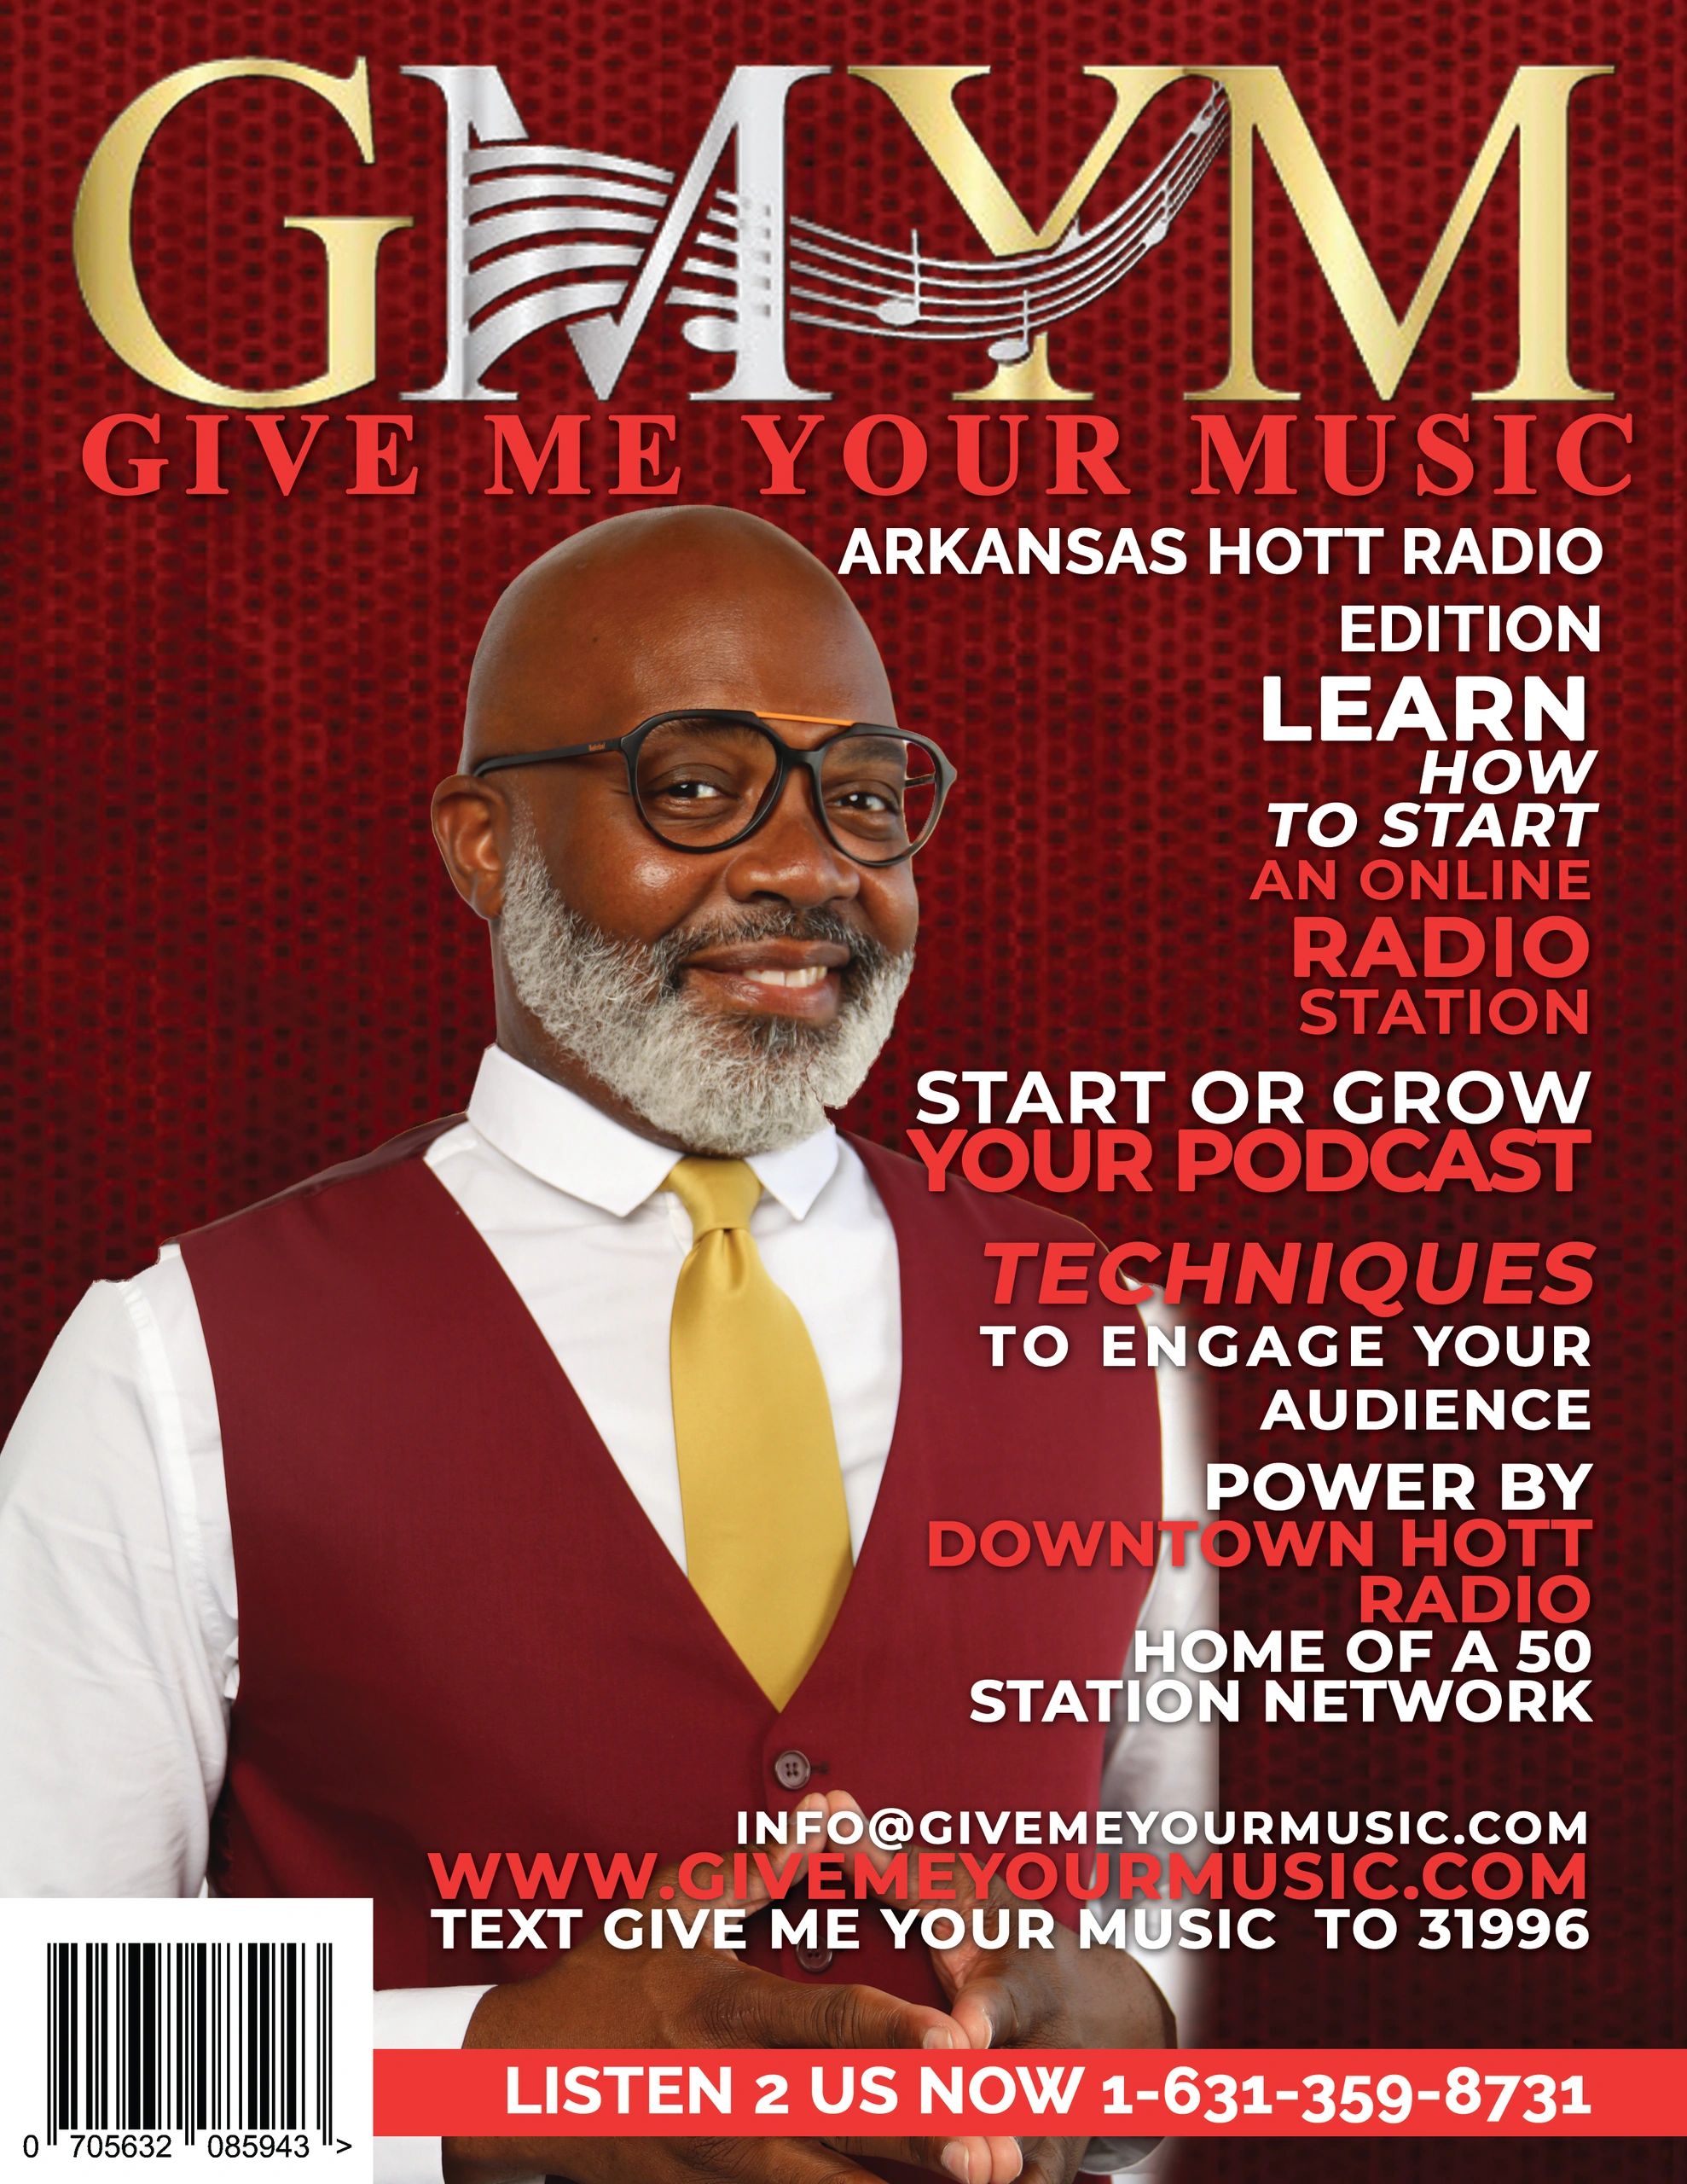 Downtown Hott Radio - Arkansas Hott Radio, Send Me Your Music